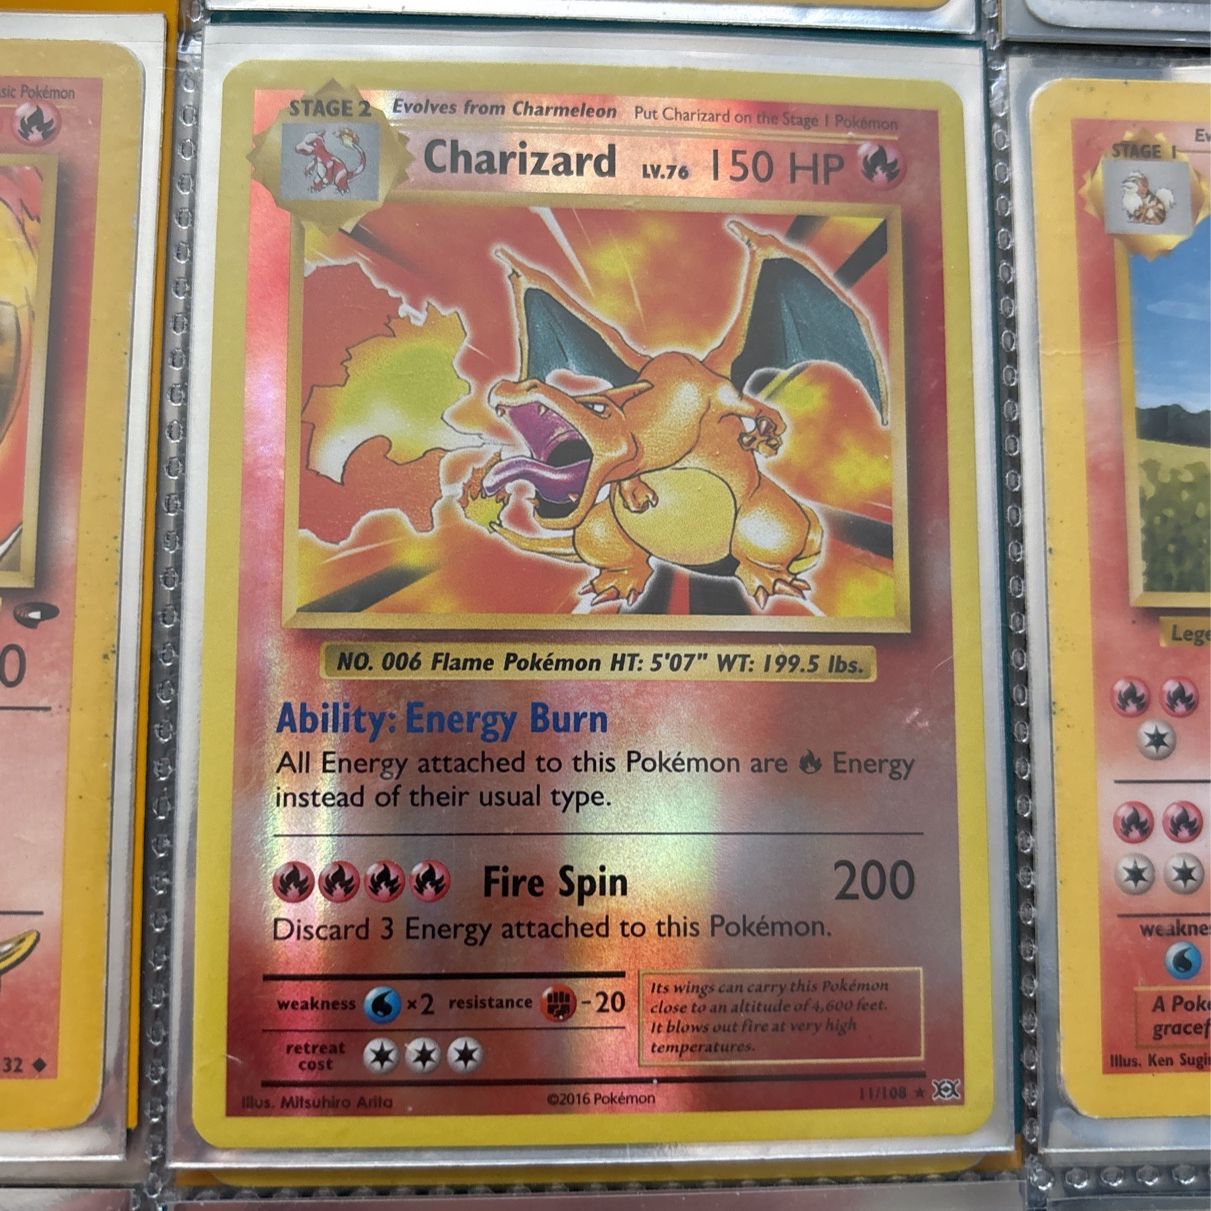 Full binder of Pokémon cards 